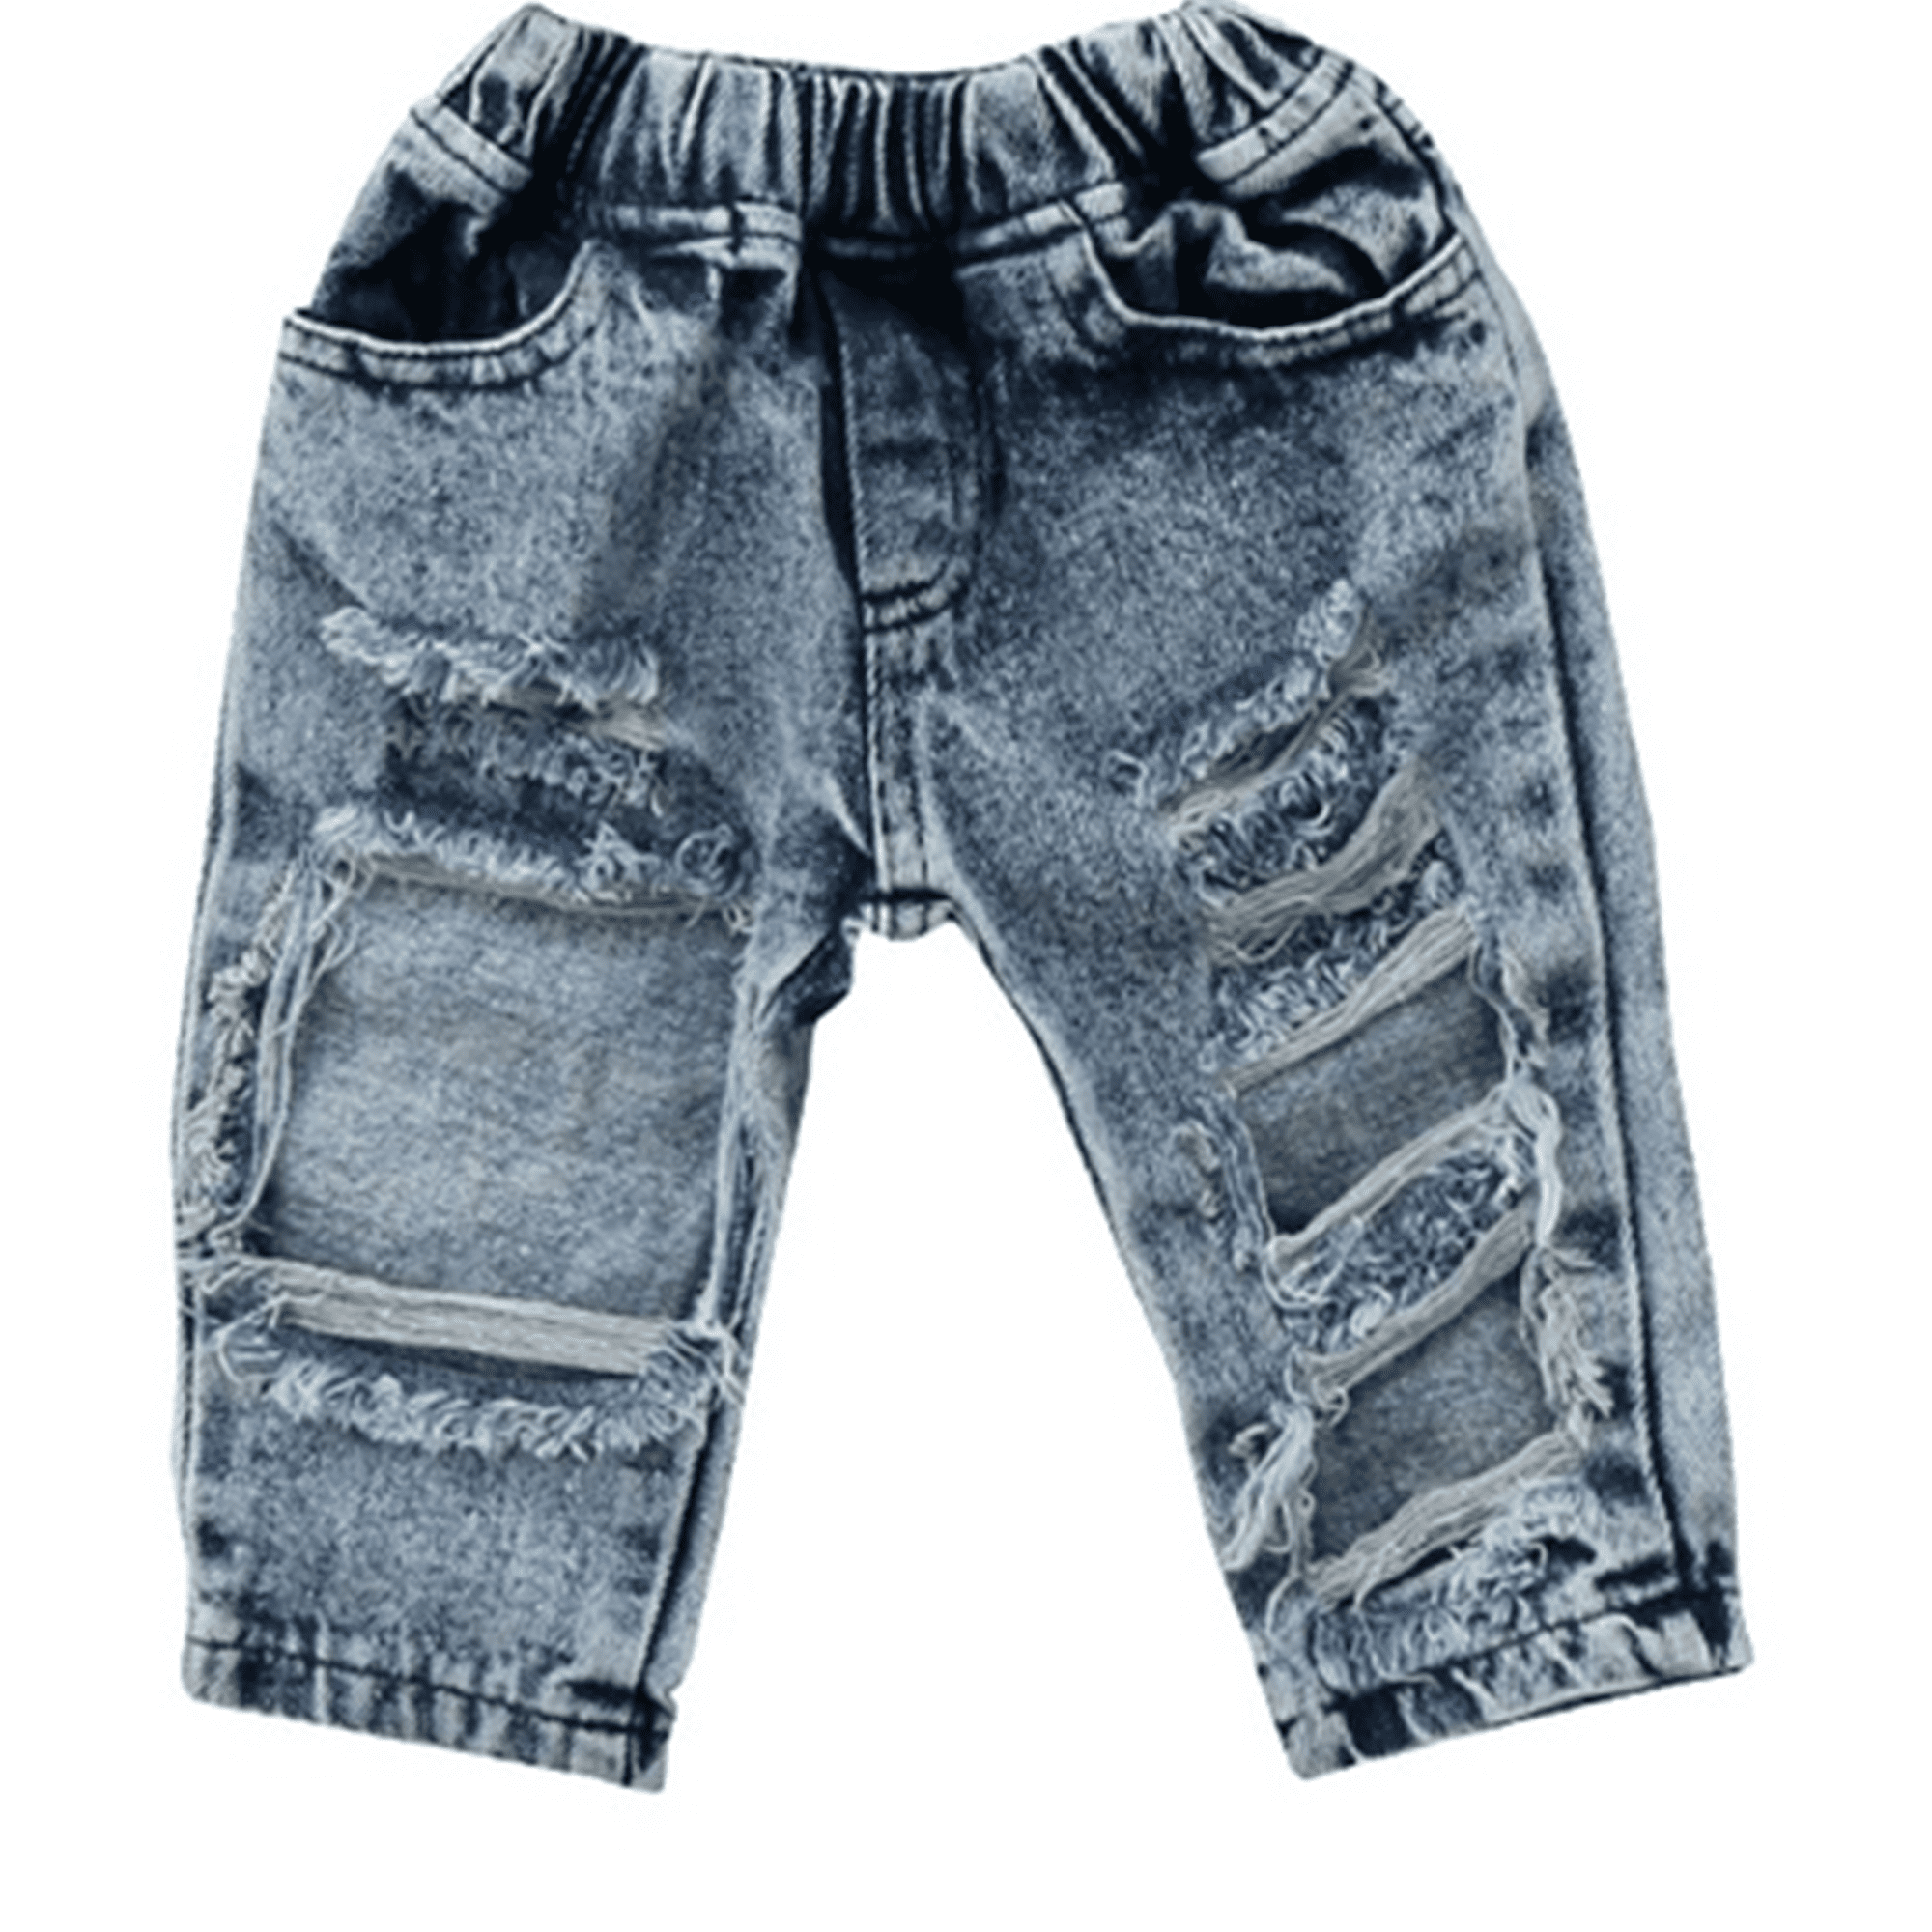 Baby Pants,Infant Toddler Gilrs Boys Kid Hole Casaul Jeans Denim Pants Autumn Winter Bottoms Trousers 1-4T